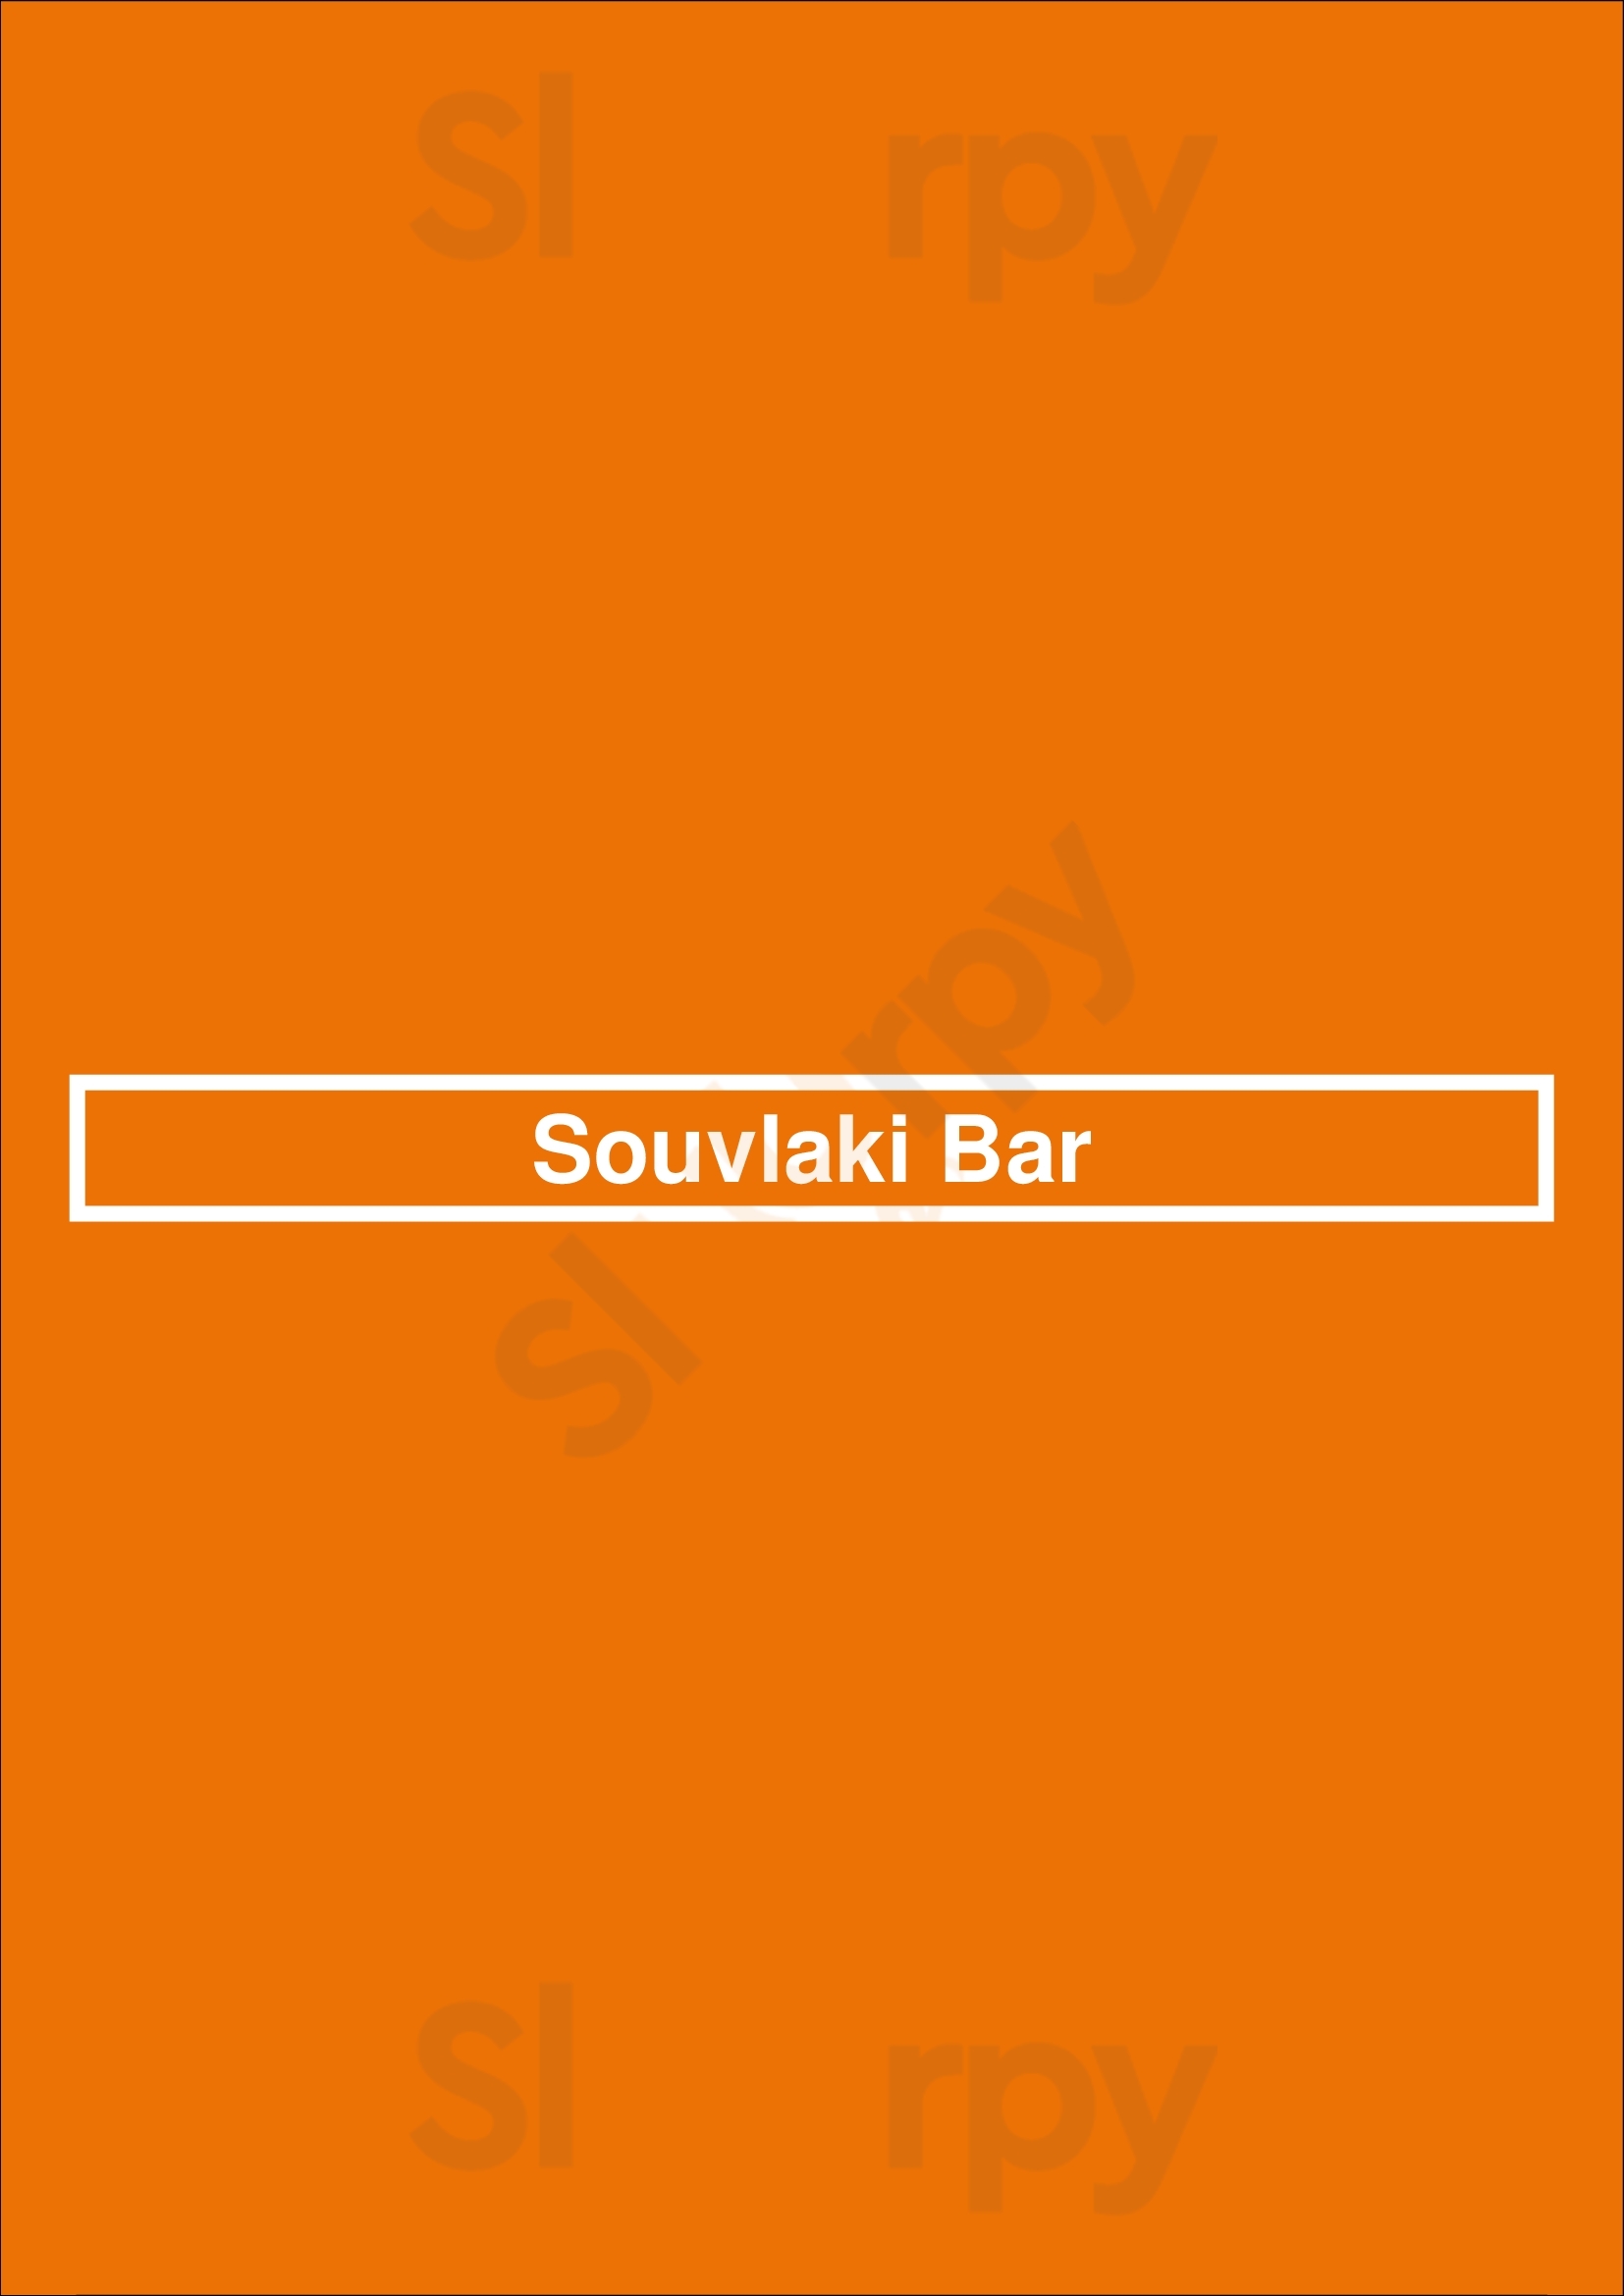 Souvlaki Bar Saint-Jean-sur-Richelieu Menu - 1